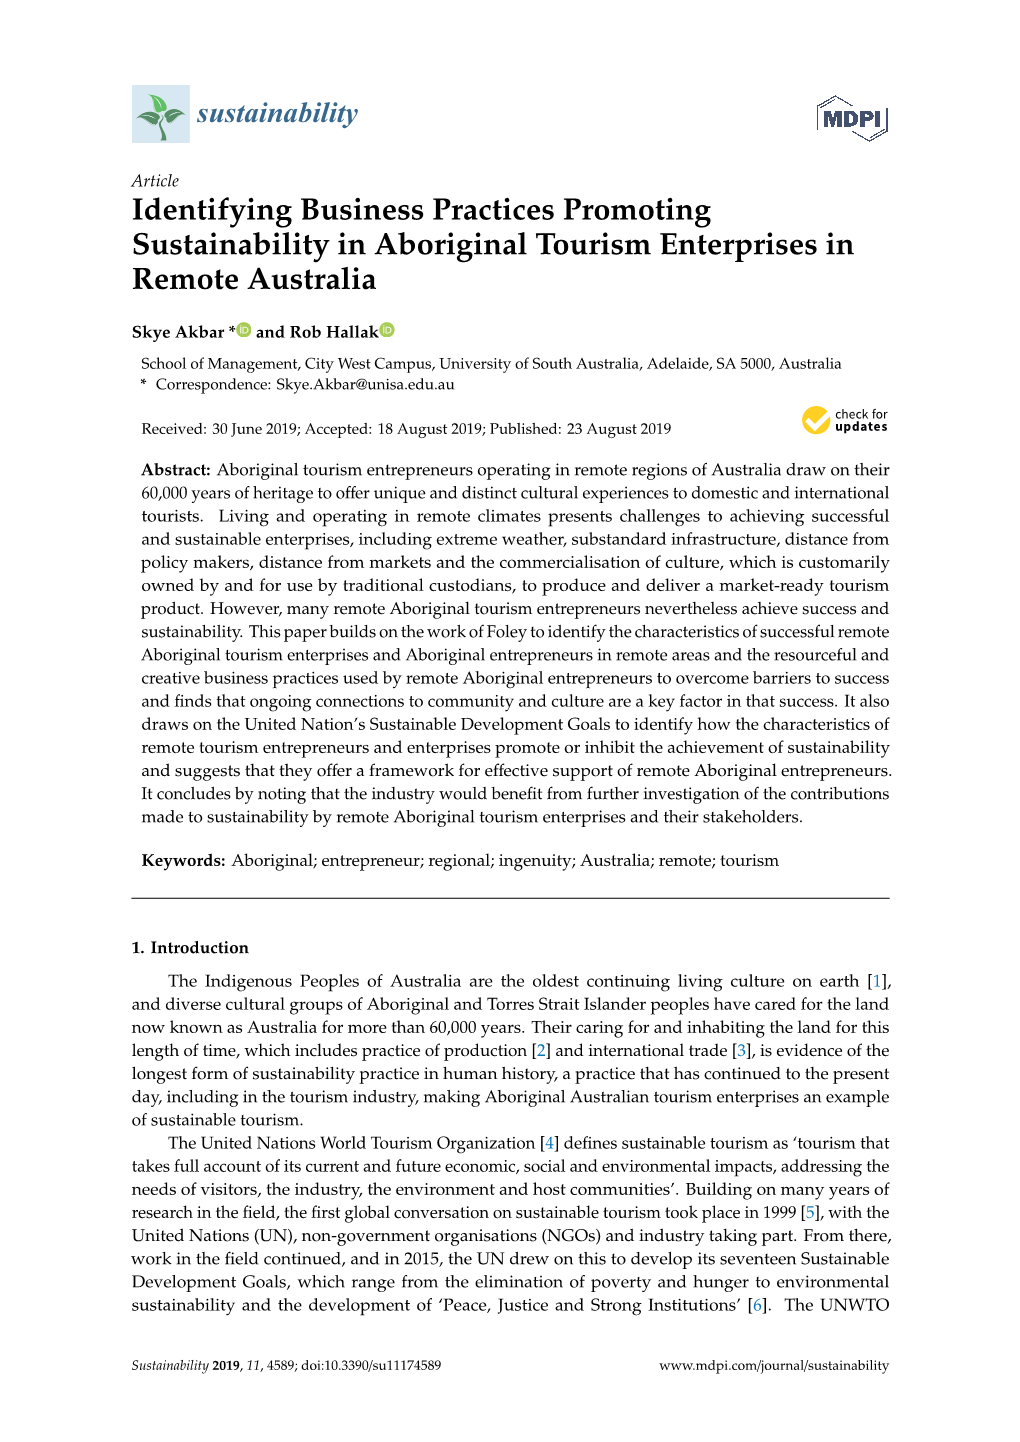 Identifying Business Practices Promoting Sustainability in Aboriginal Tourism Enterprises in Remote Australia